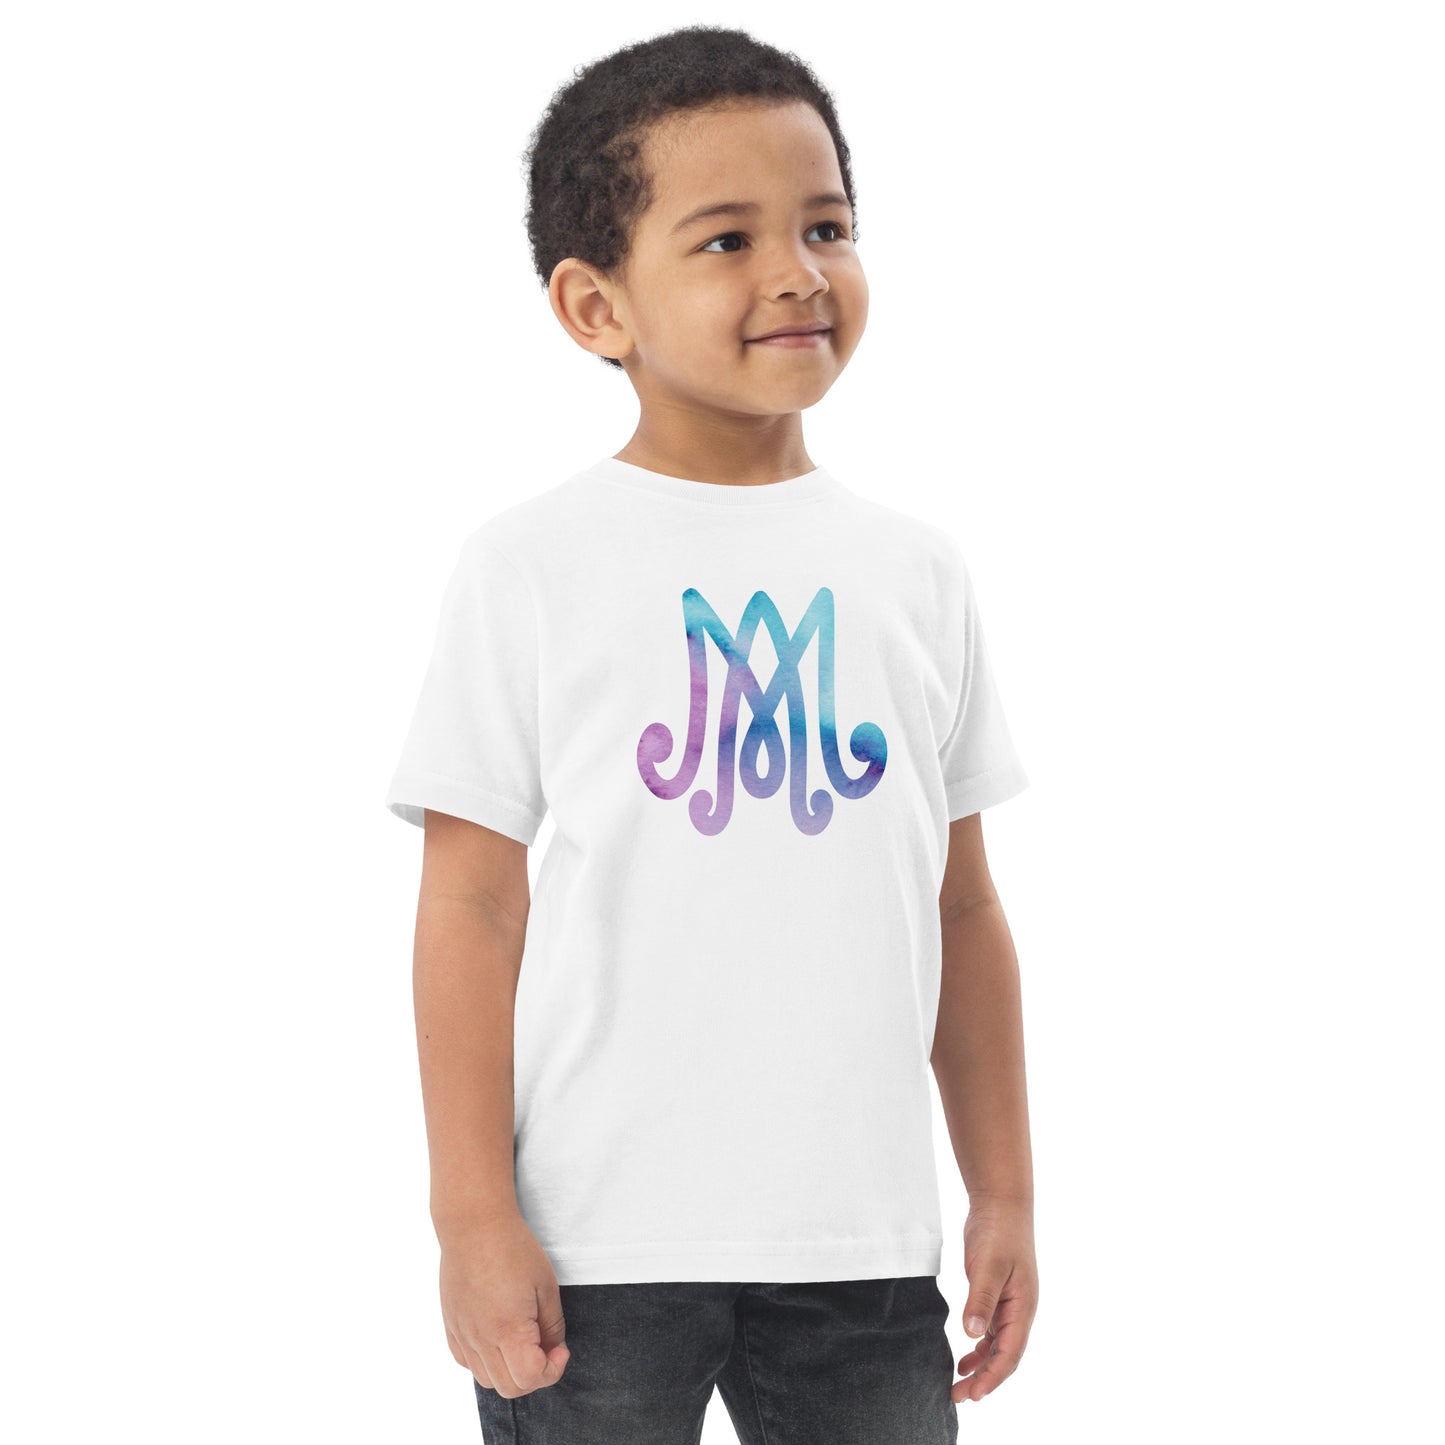 Auspice Maria - Toddler jersey t-shirt